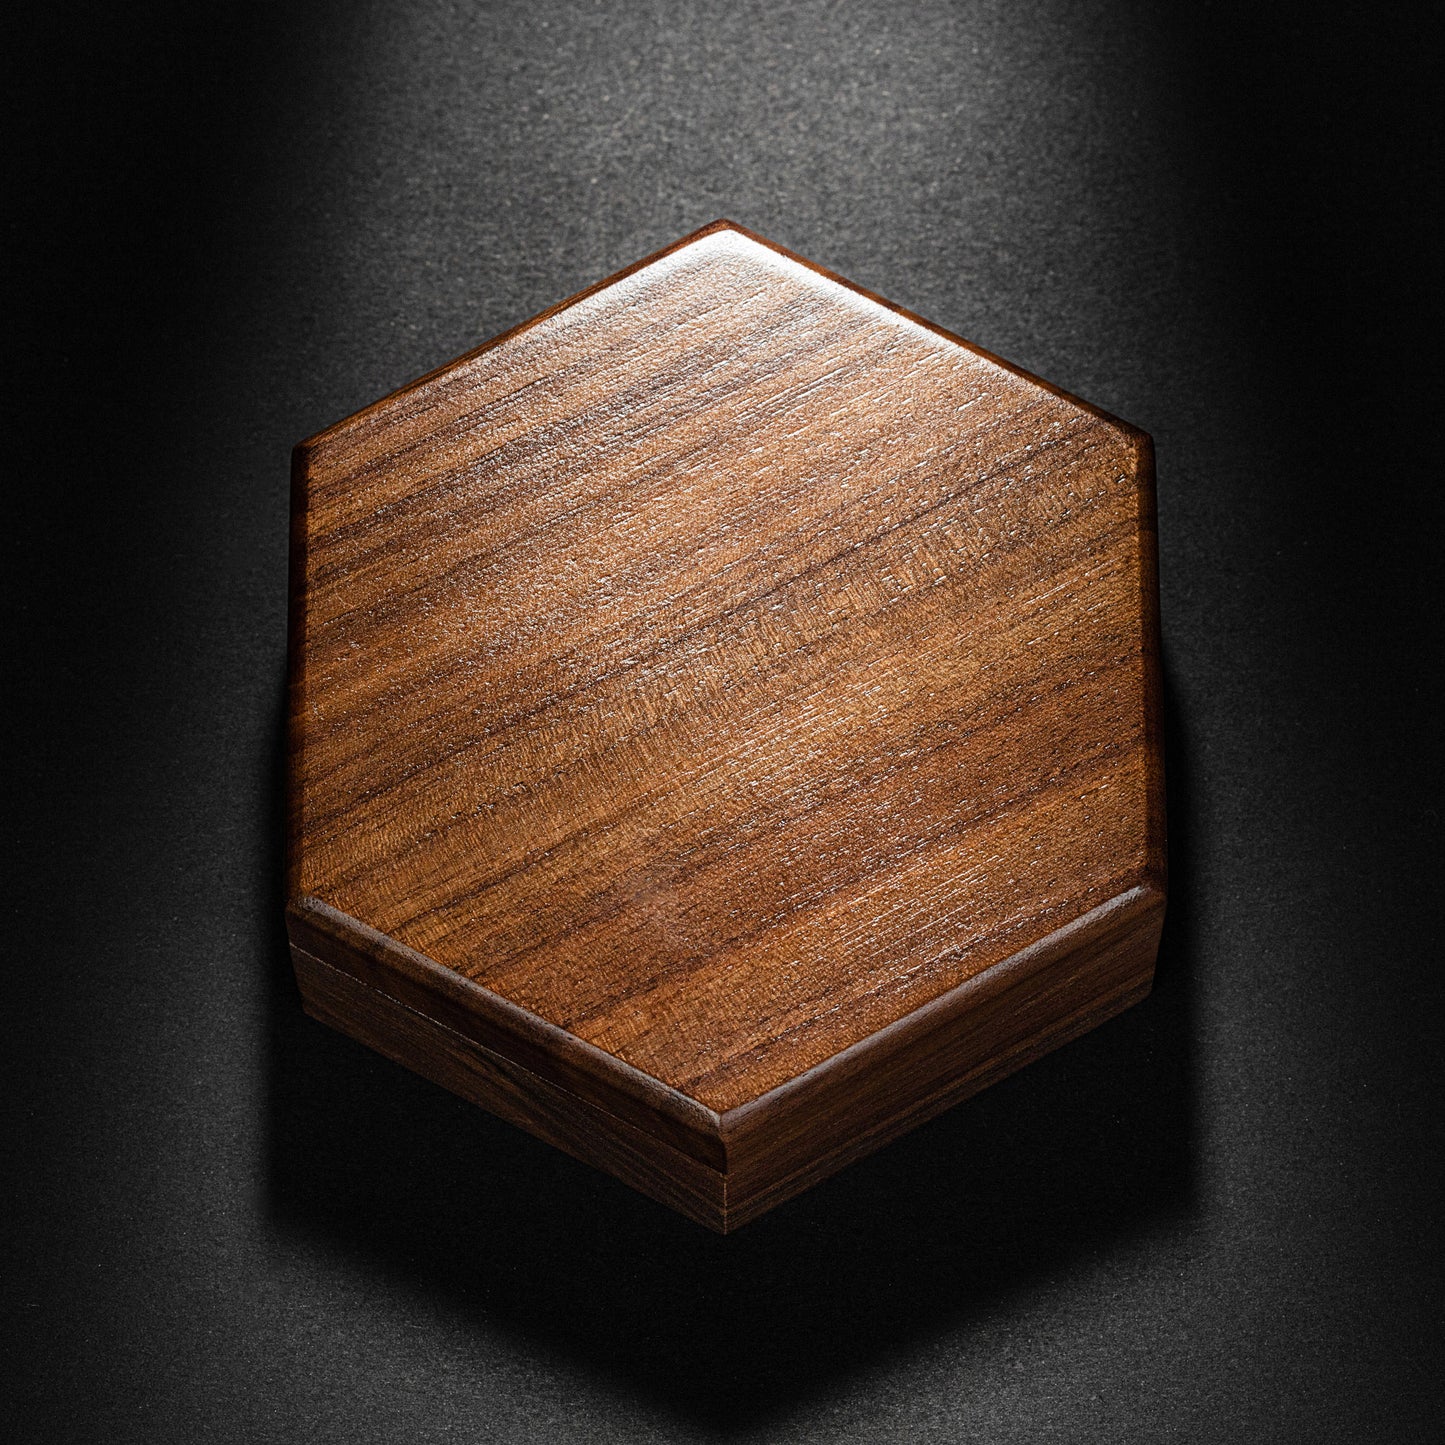 Black Walnut Wood DnD D&D Dice Box - CrystalMaggie